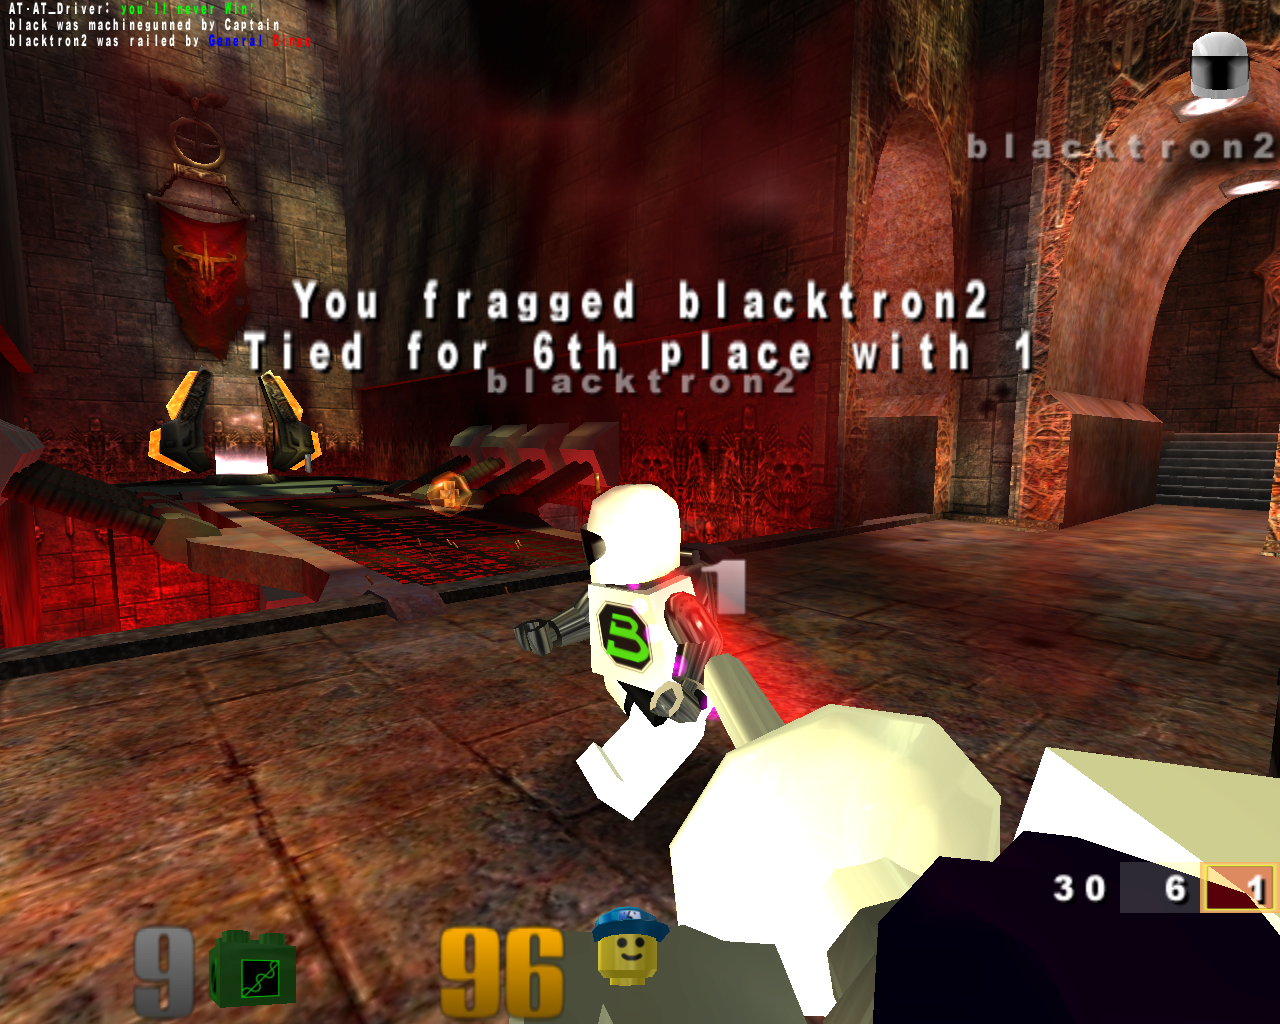 Quake 2 download